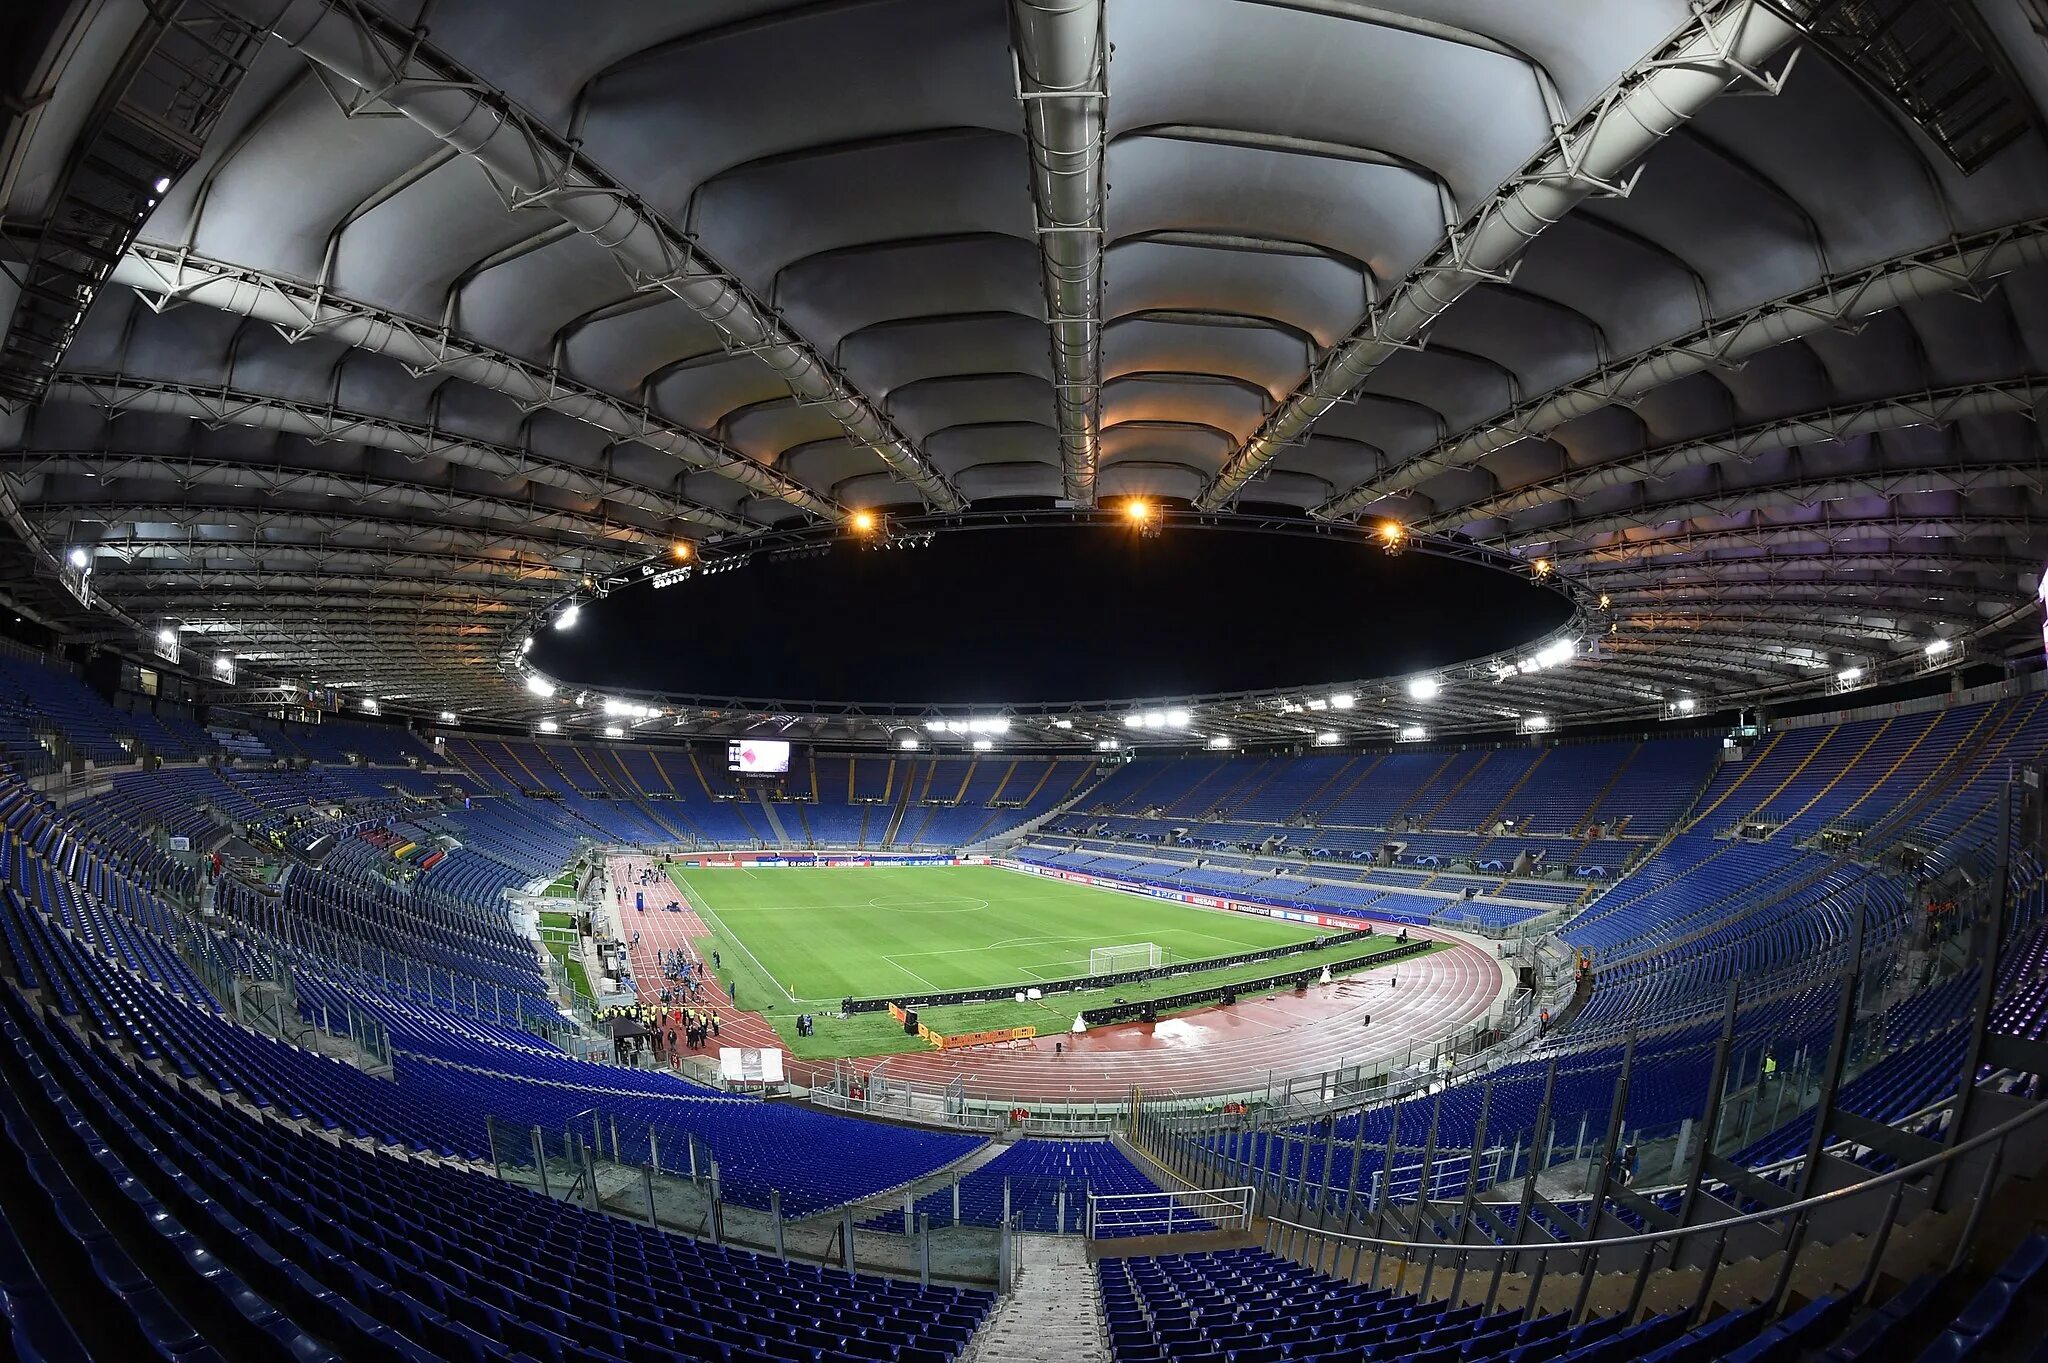 Рим стадион евро 2020. Стадион Олимпико Рим. Стадион: Олимпийский стадион Рим 2024. Олимпико стадион Рим трибуны пес 2020. Олимпико стадион